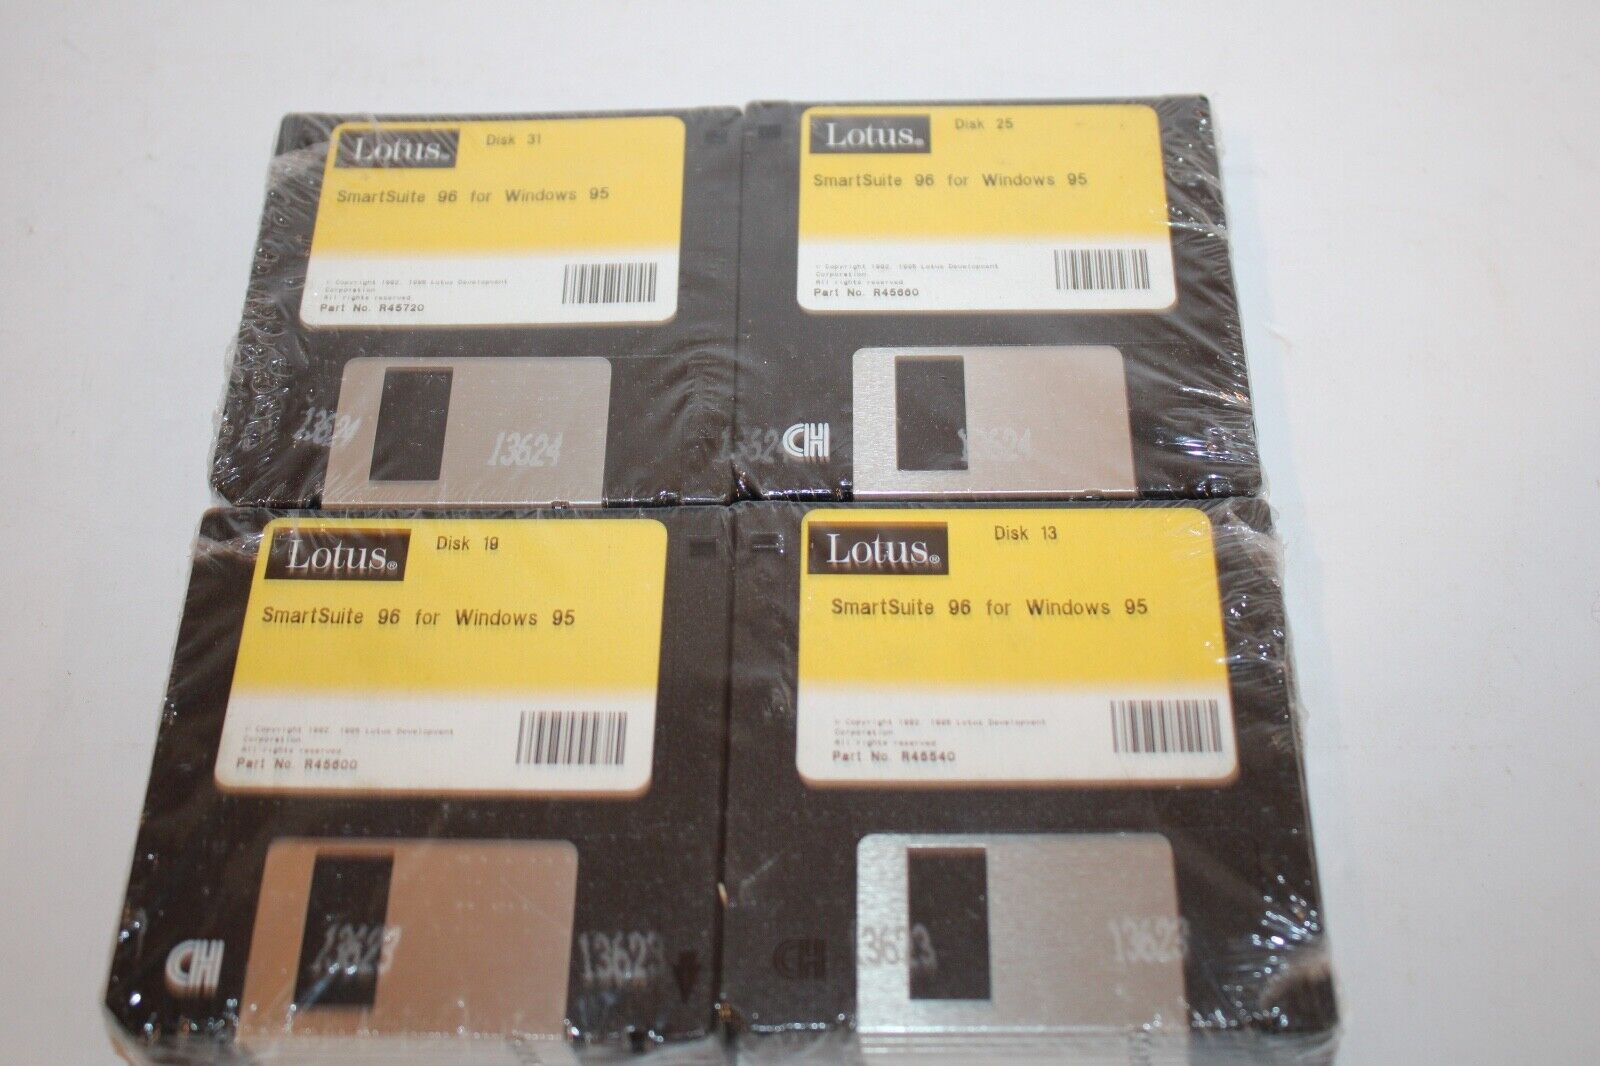 Lotus SmartSuite 96 for Windows 95 Lot of 24 Diskskettes Discs NEW SEALED